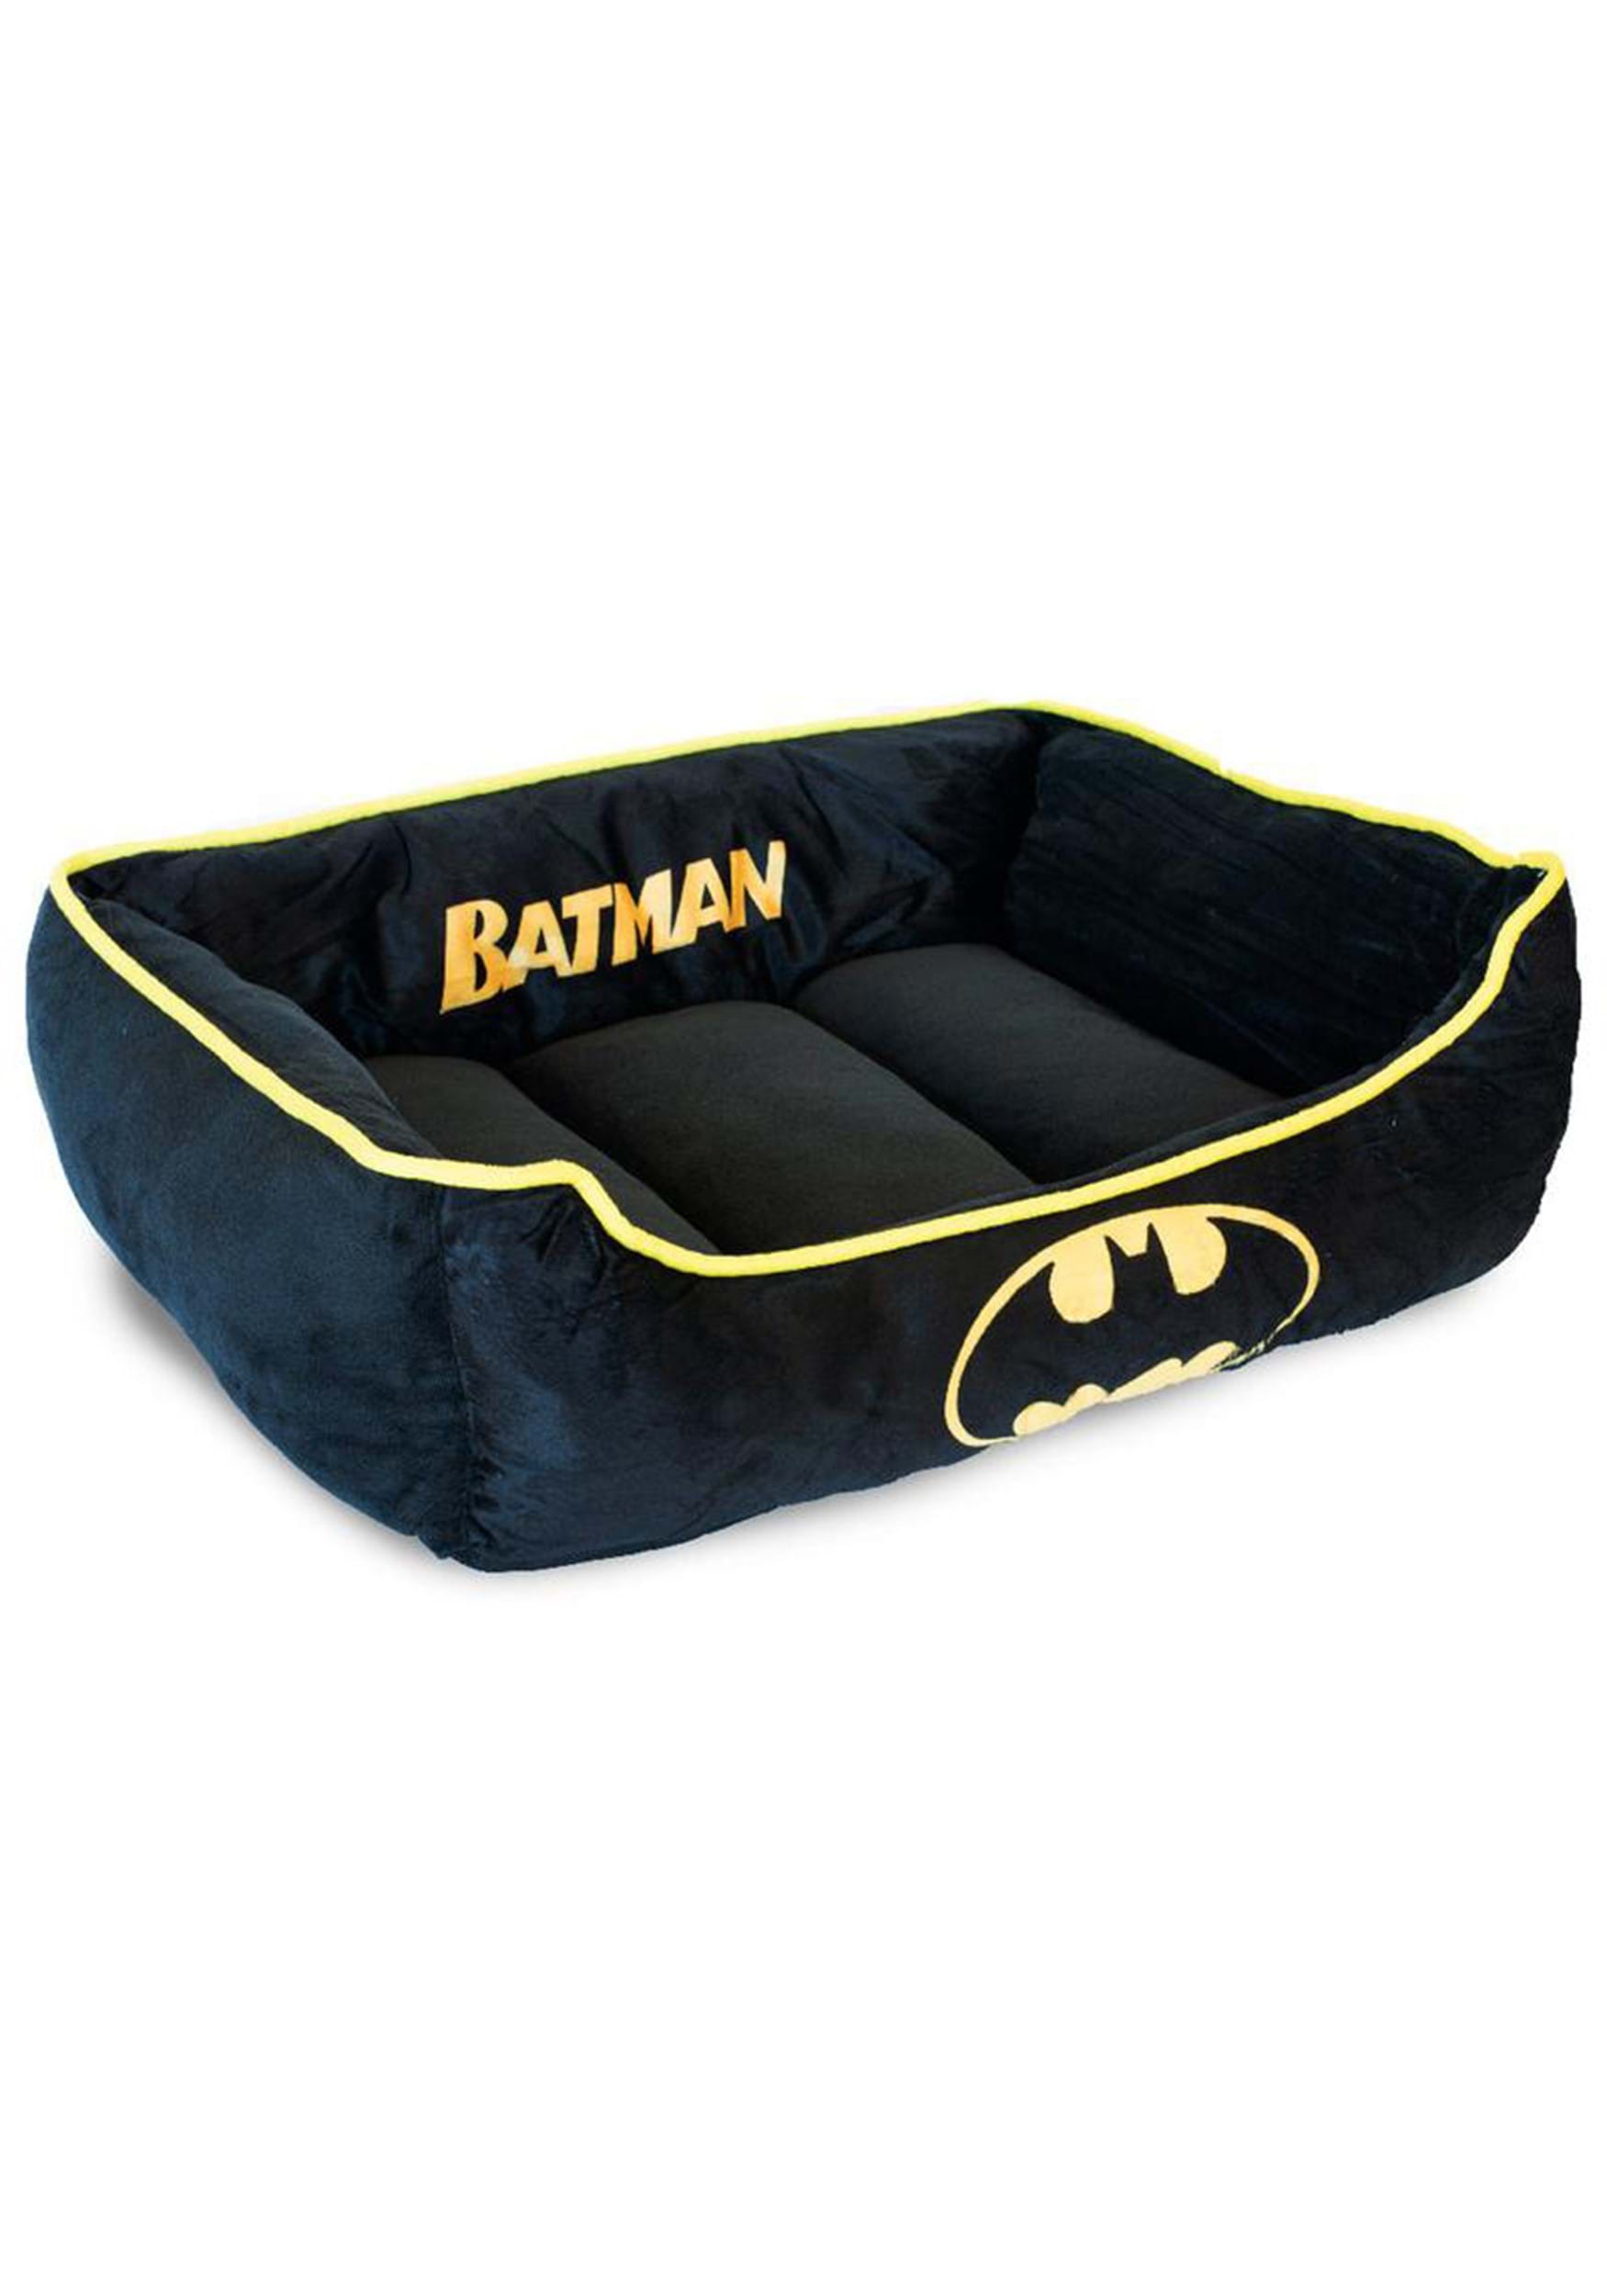 Yellow And Black Batman Dog Bed